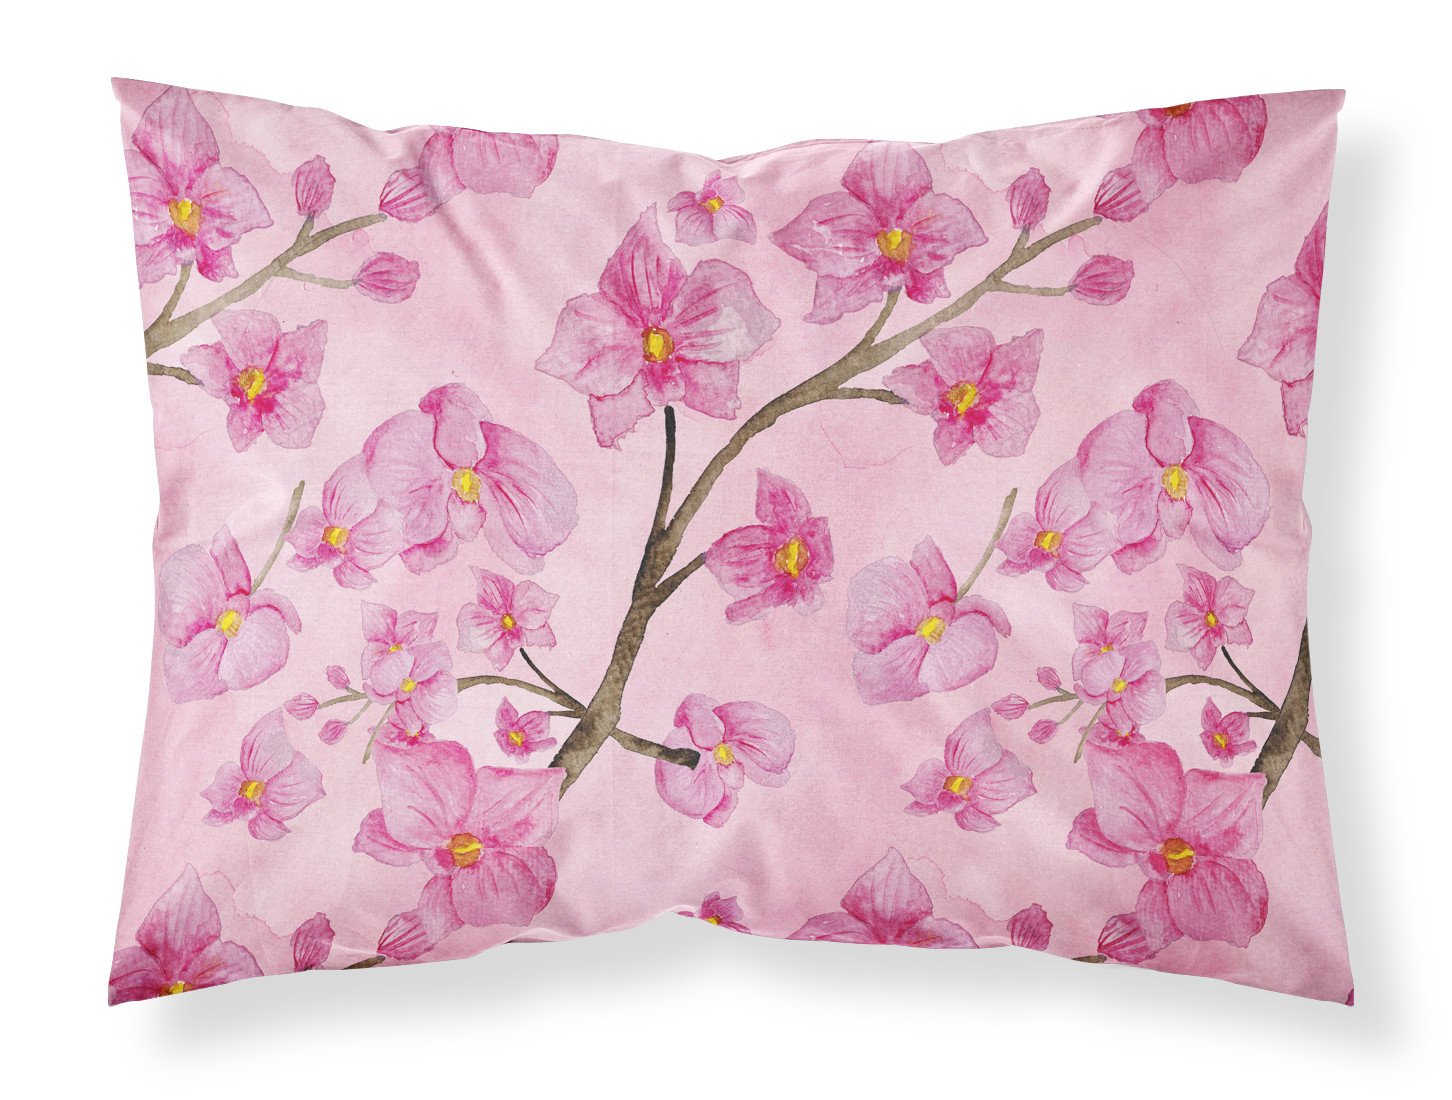 Watercolor Pink Flowers Fabric Standard Pillowcase BB7505PILLOWCASE by Caroline's Treasures